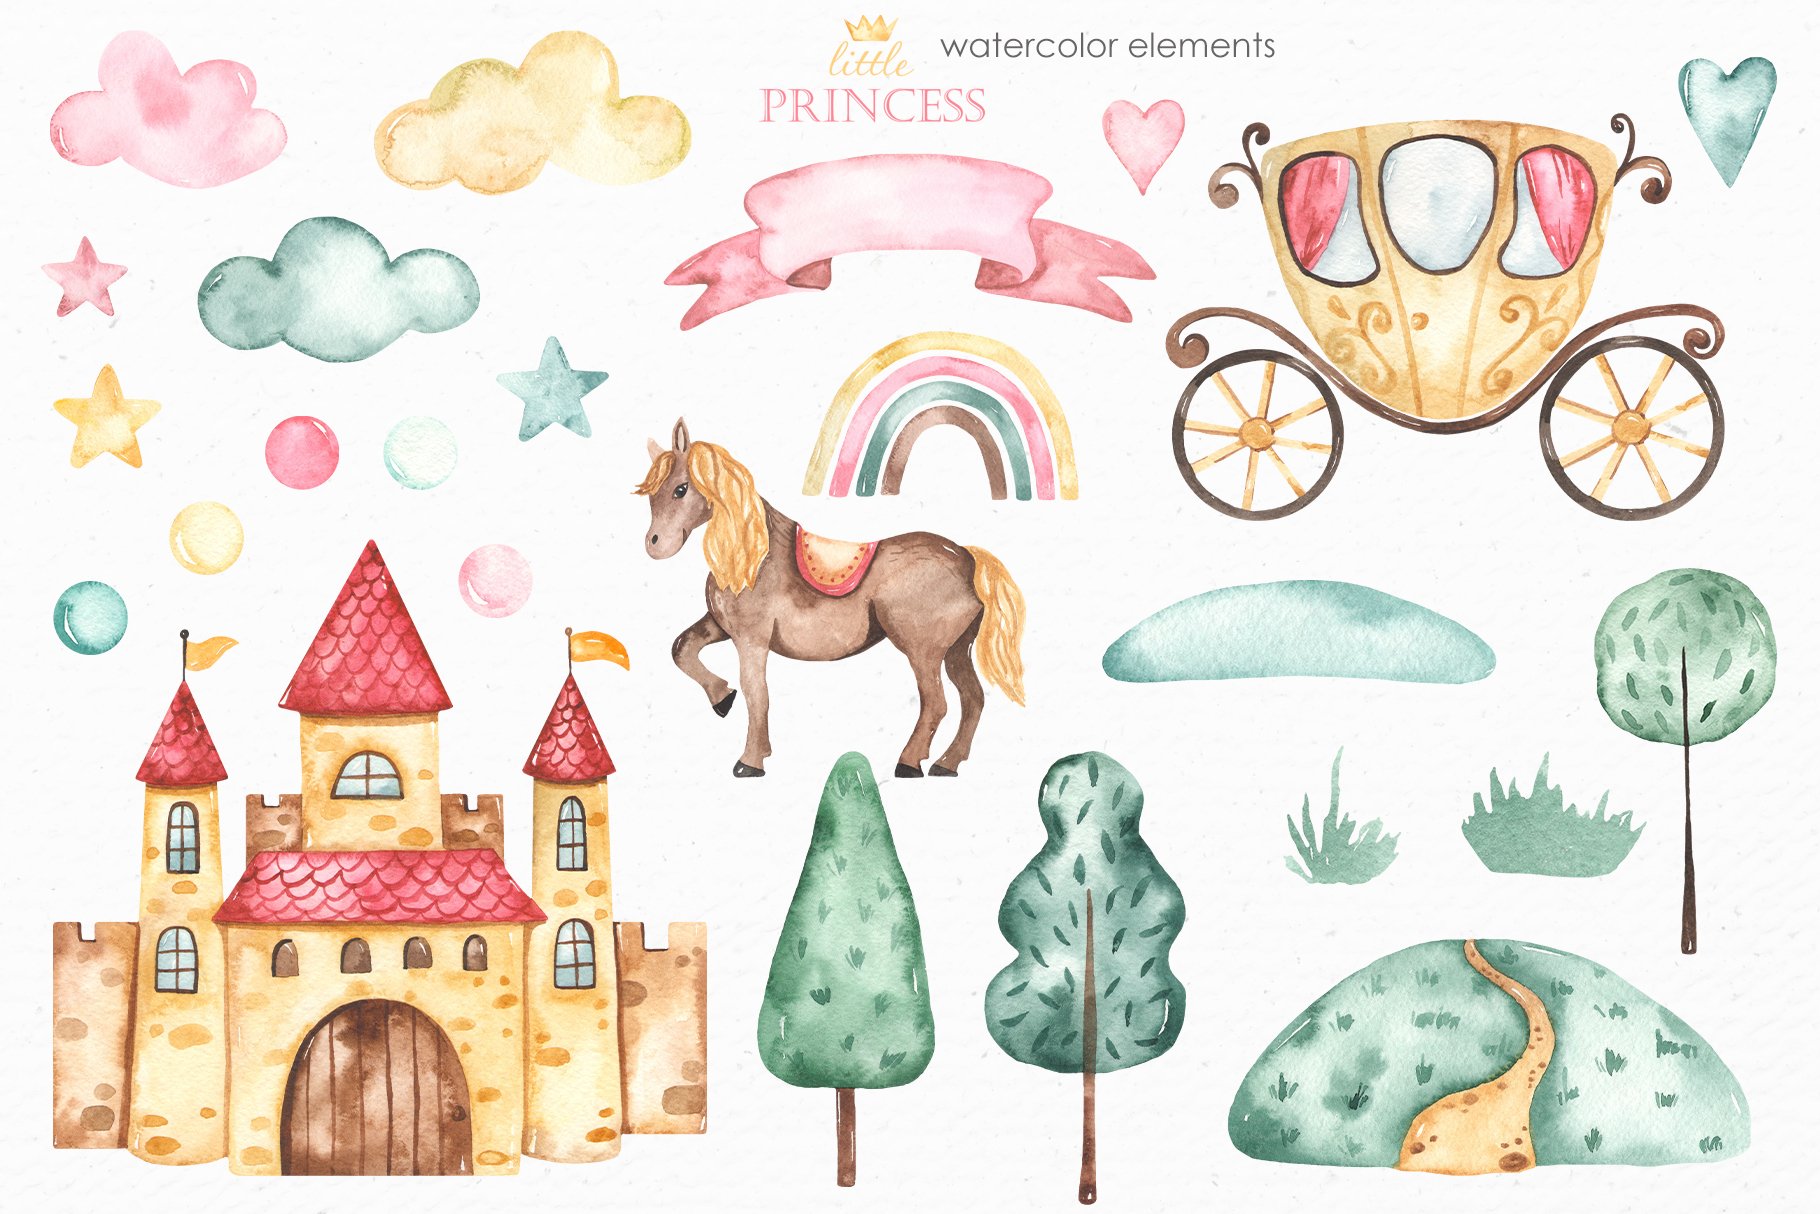 3 watercolor little princess childrens collection element 728